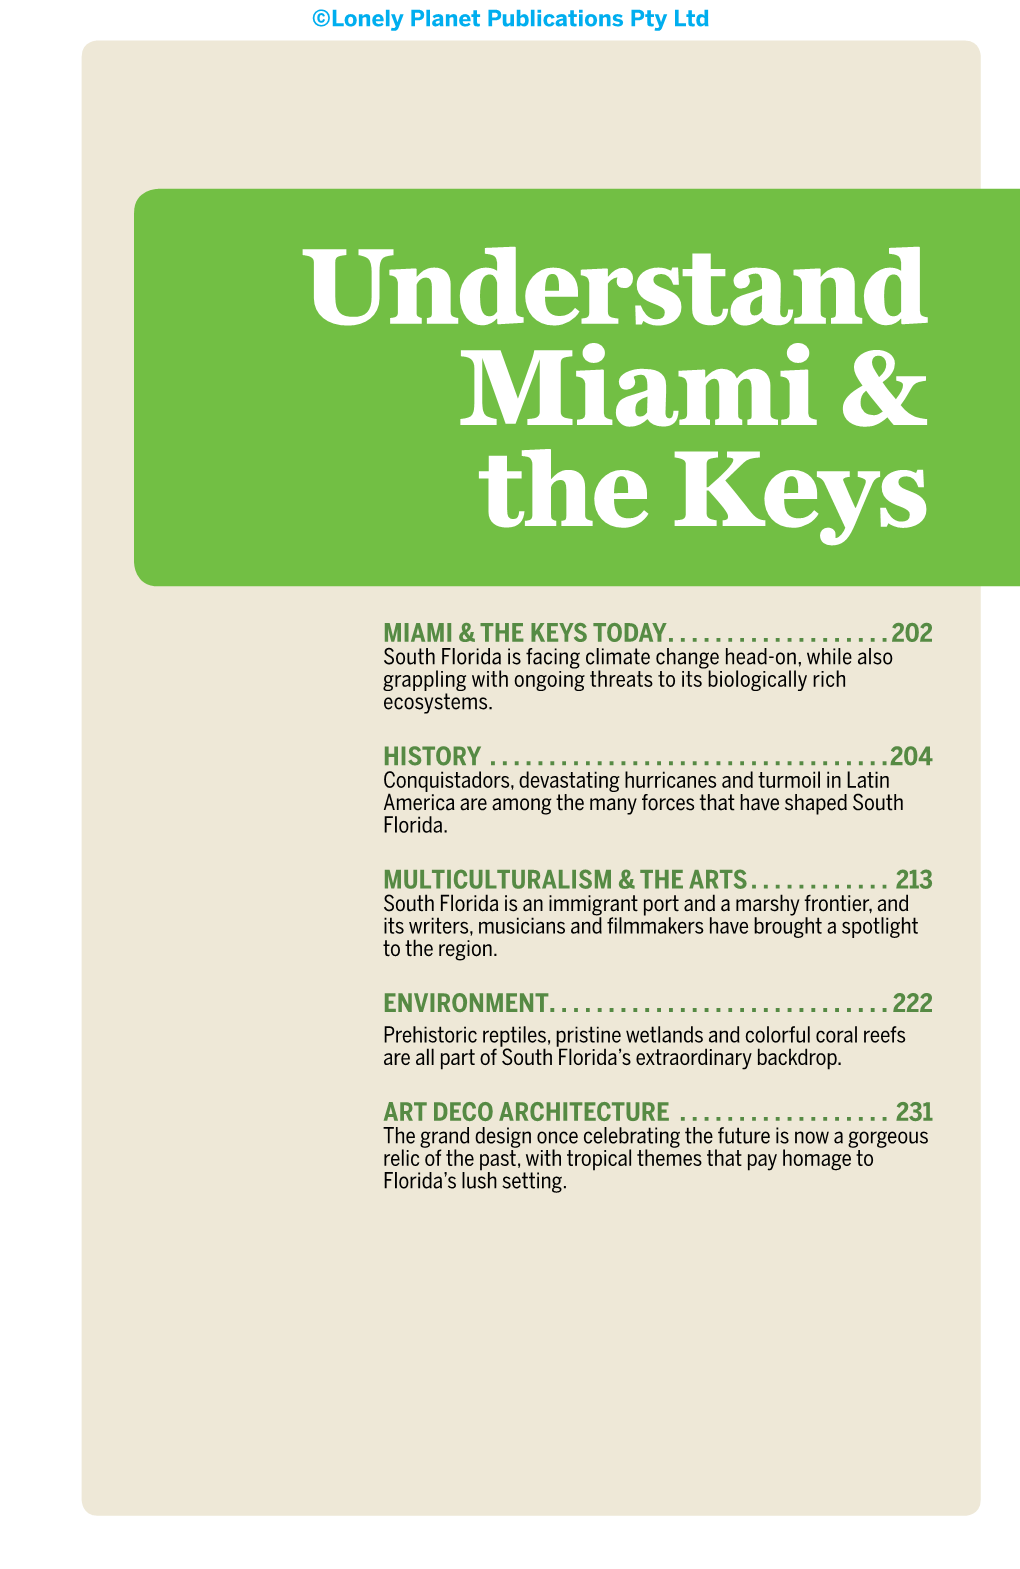 Miami & the Keys 8